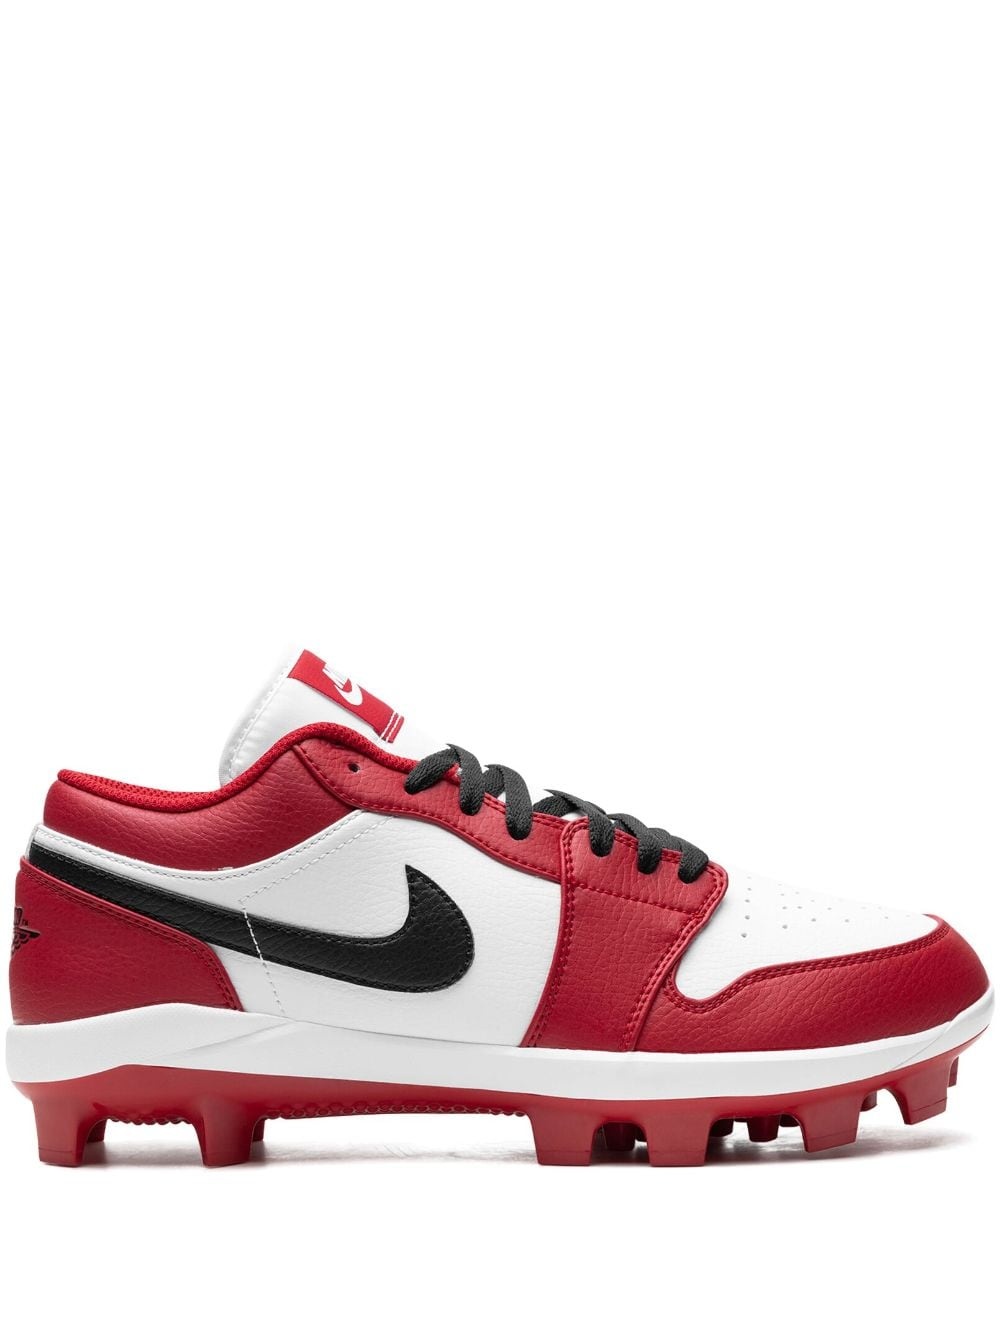 Air Jordan 1 Retro MCS Low "Gym Red" baseball cleats - 1